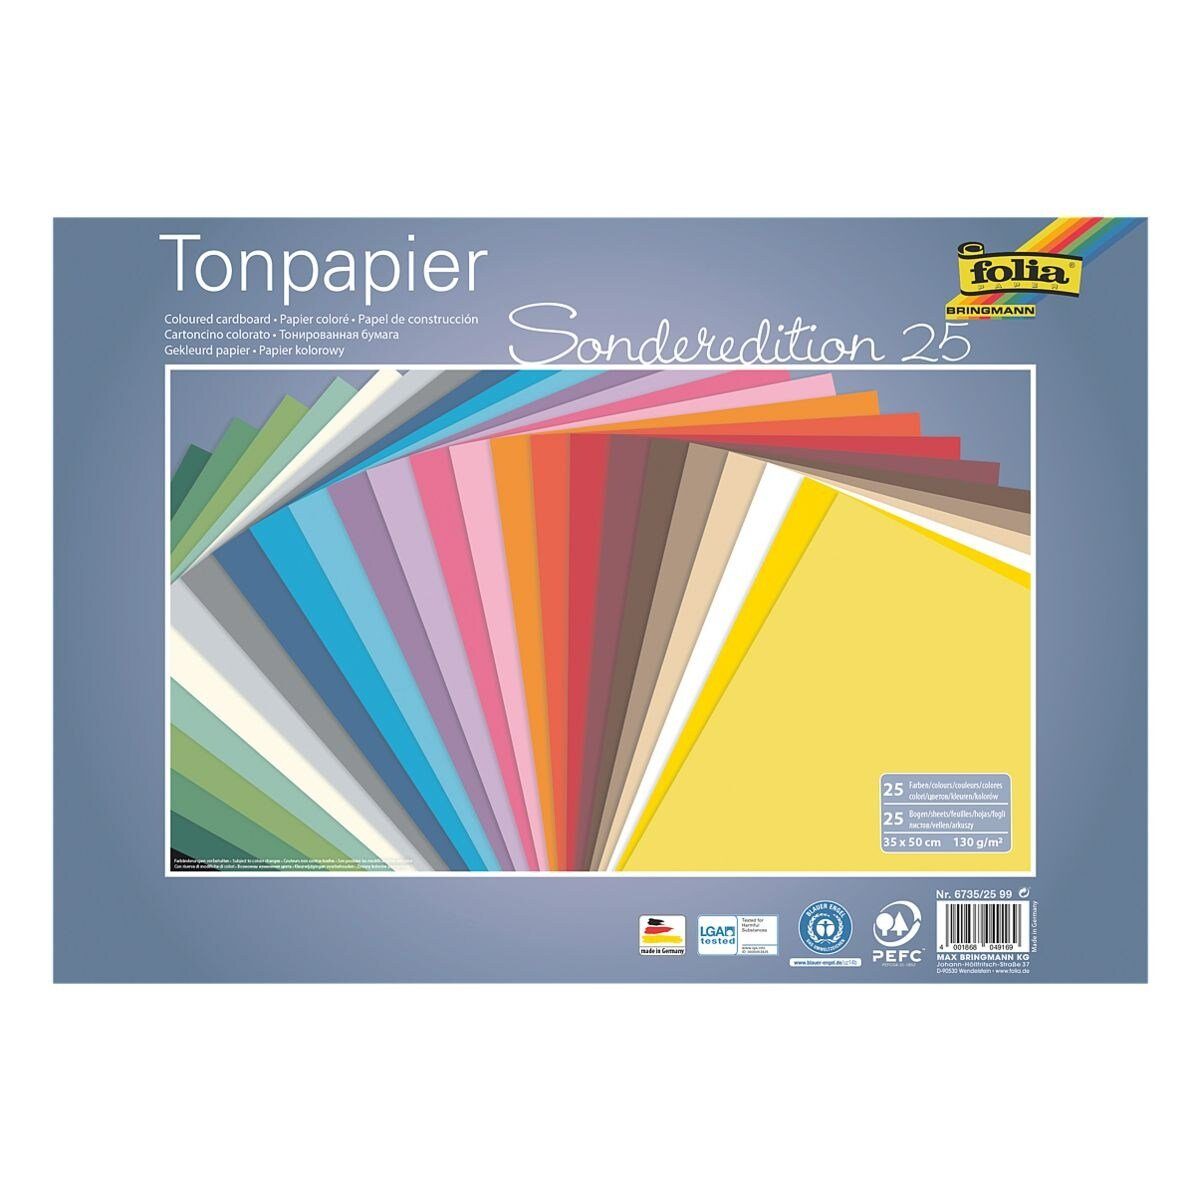 Bastelkartonpapier 35x50 in 25 Blatt 25, Farben, Format Folia 130 Sonderedition cm, 25 g/m², Tonpapier